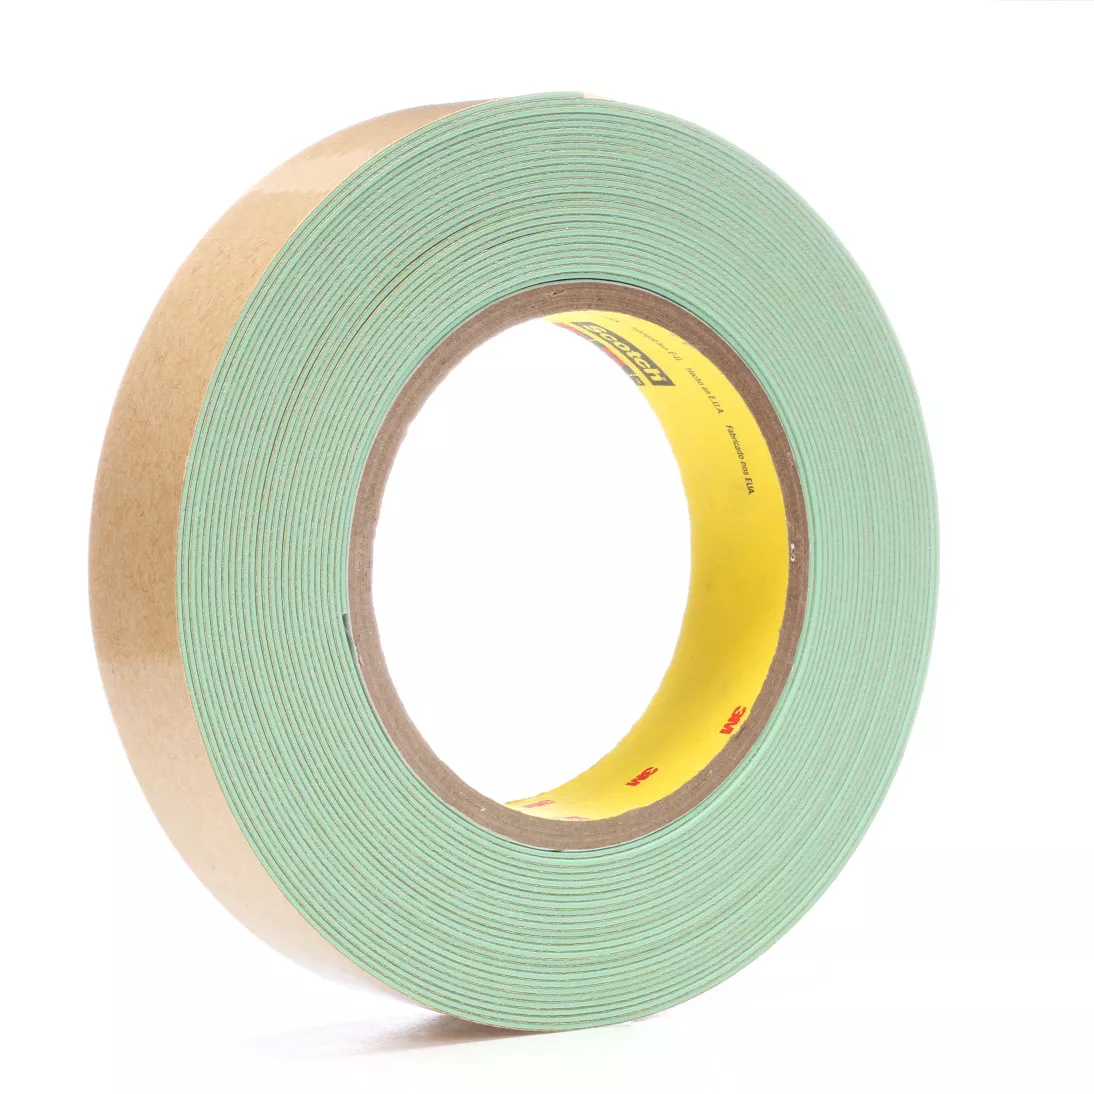 3M™ Impact Stripping Tape 500, Green, 1 in x 10 yd, 36 mil, 9 rolls per
case